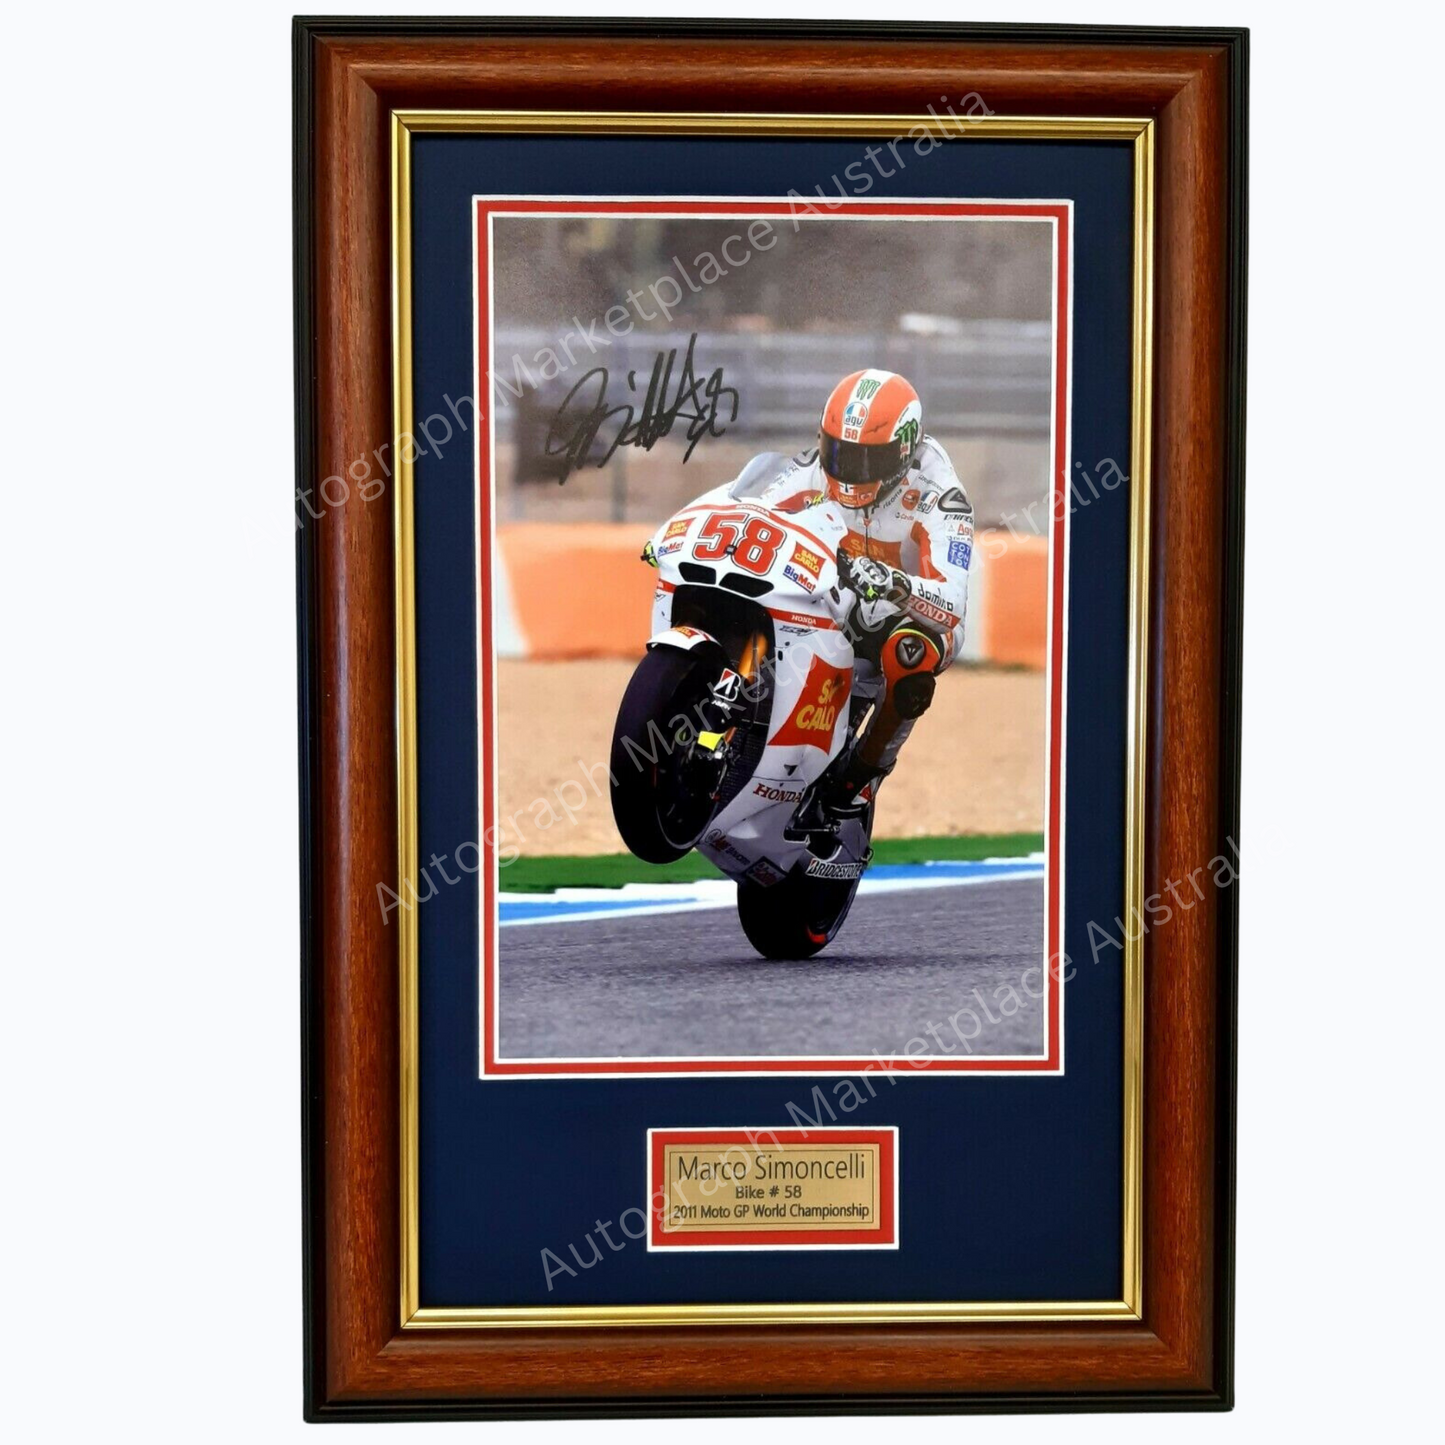 Marco Simoncelli Moto GP 2011 Signed Framed Memorabilia Bike # 58